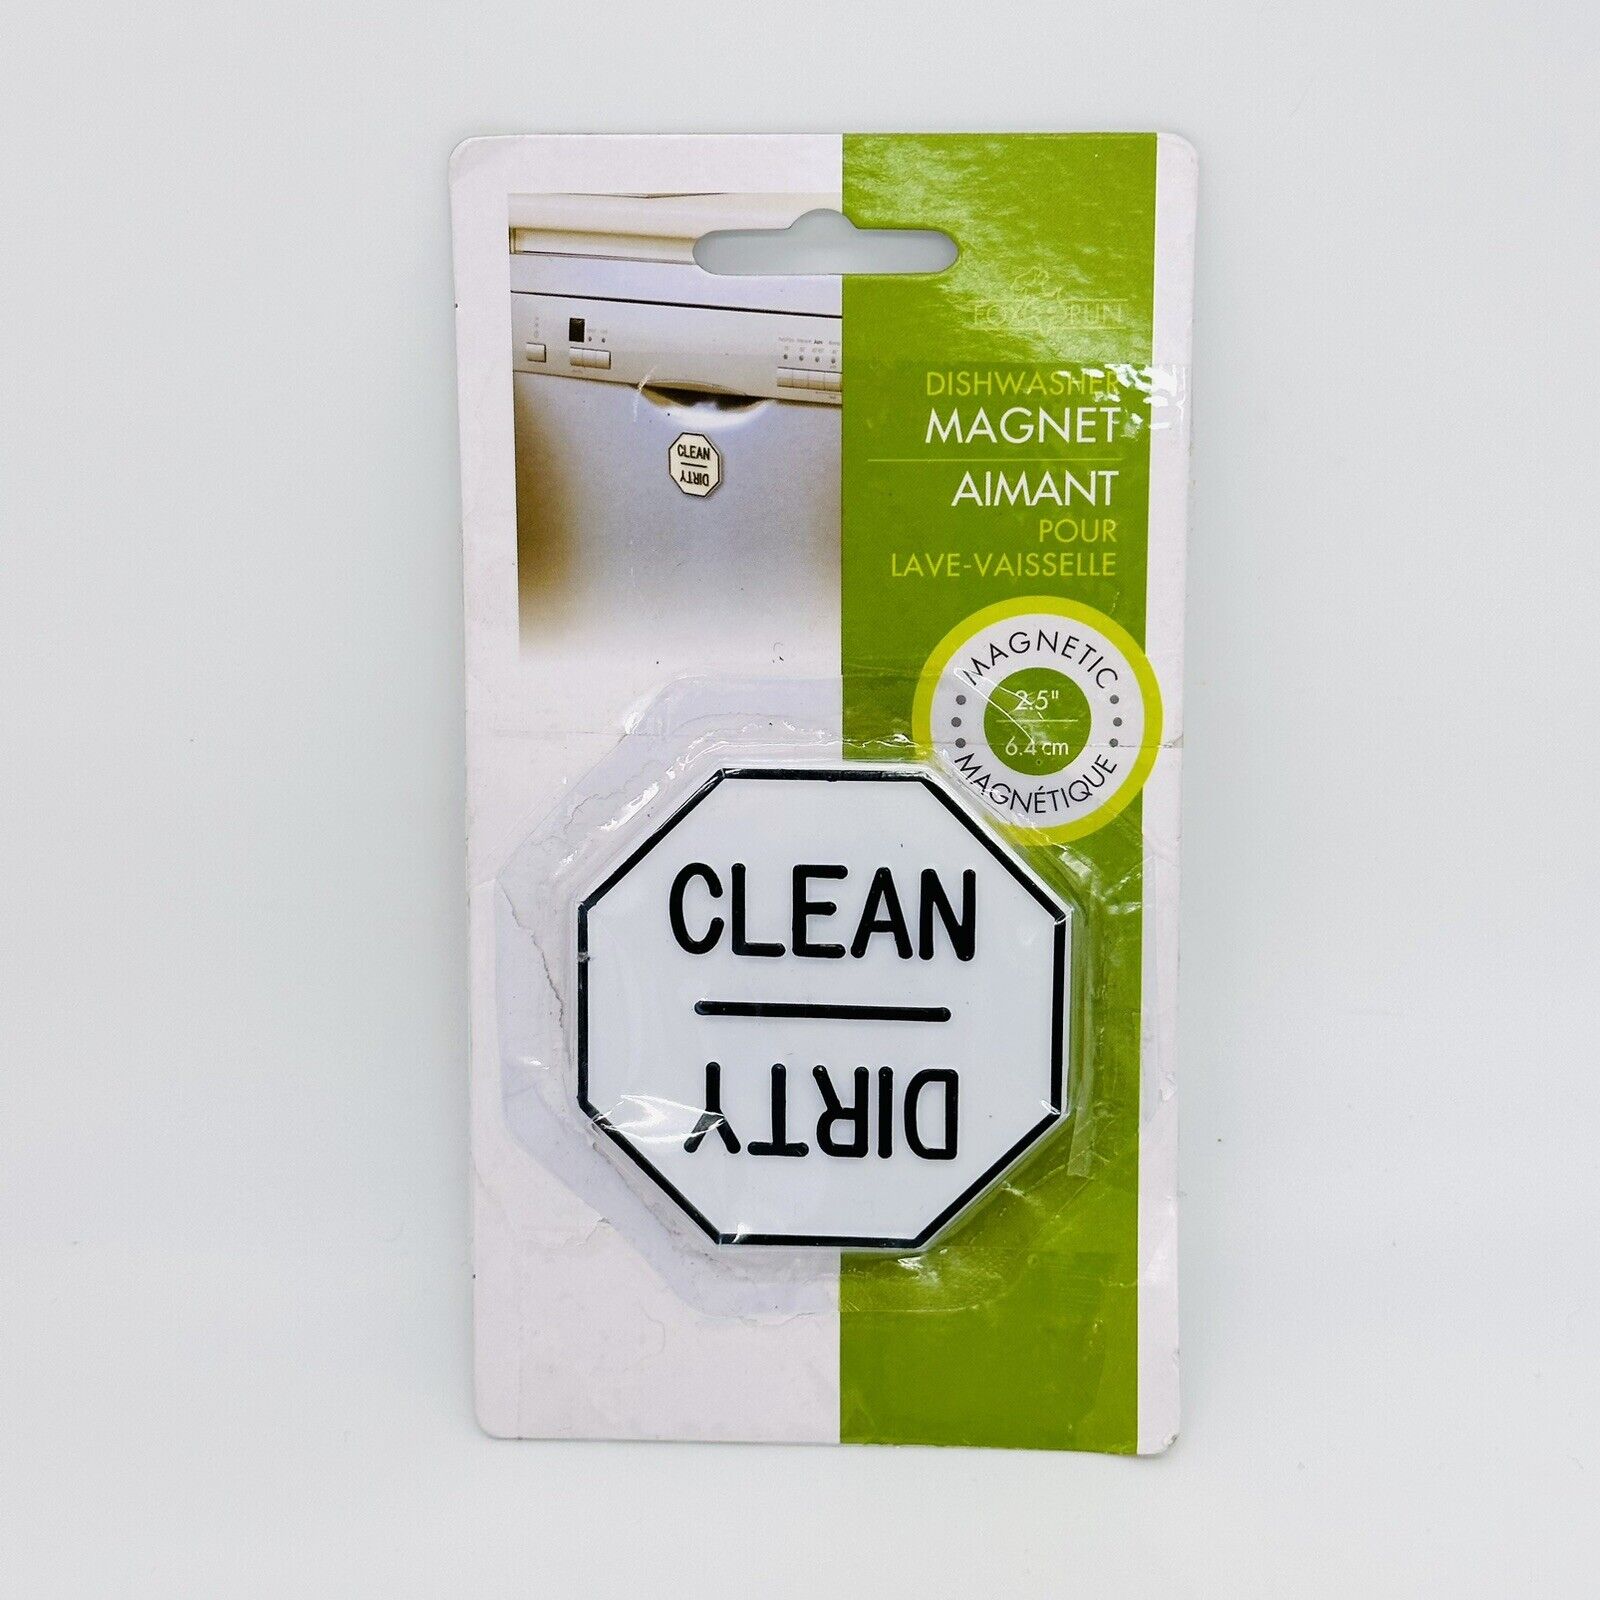 Clean or Dirty Dishwasher Magnet, 2.5 x 2.5 x 0.25, Dishwashing Machine, Dishes